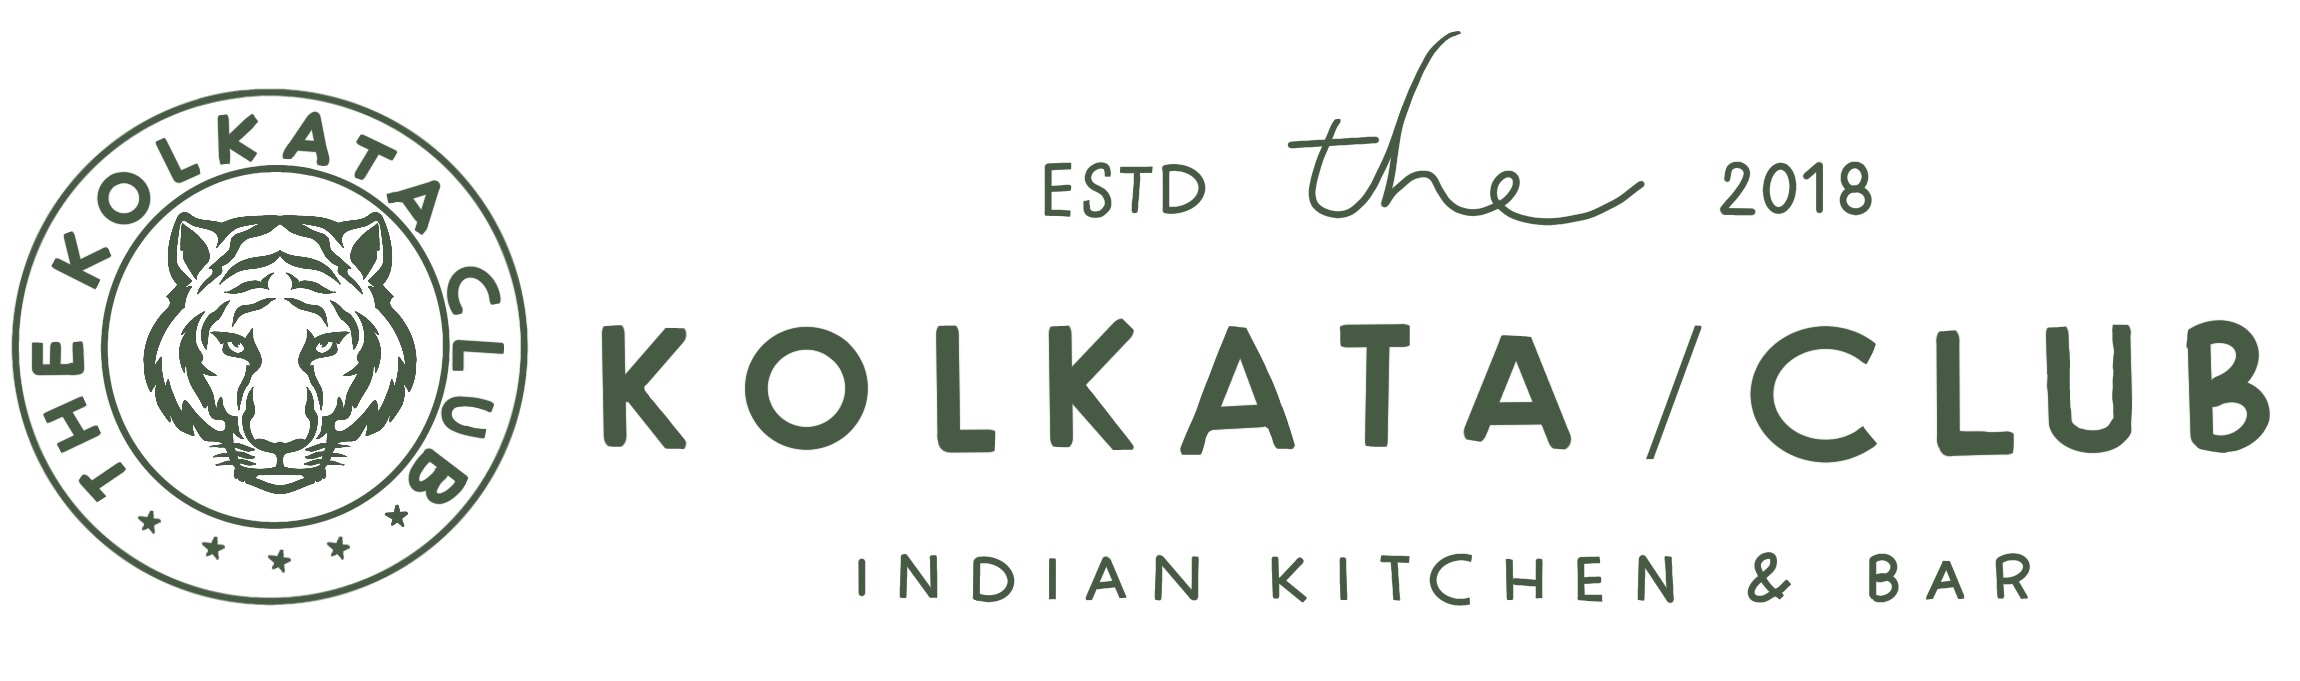 Kolkata Club Indian Kitchen